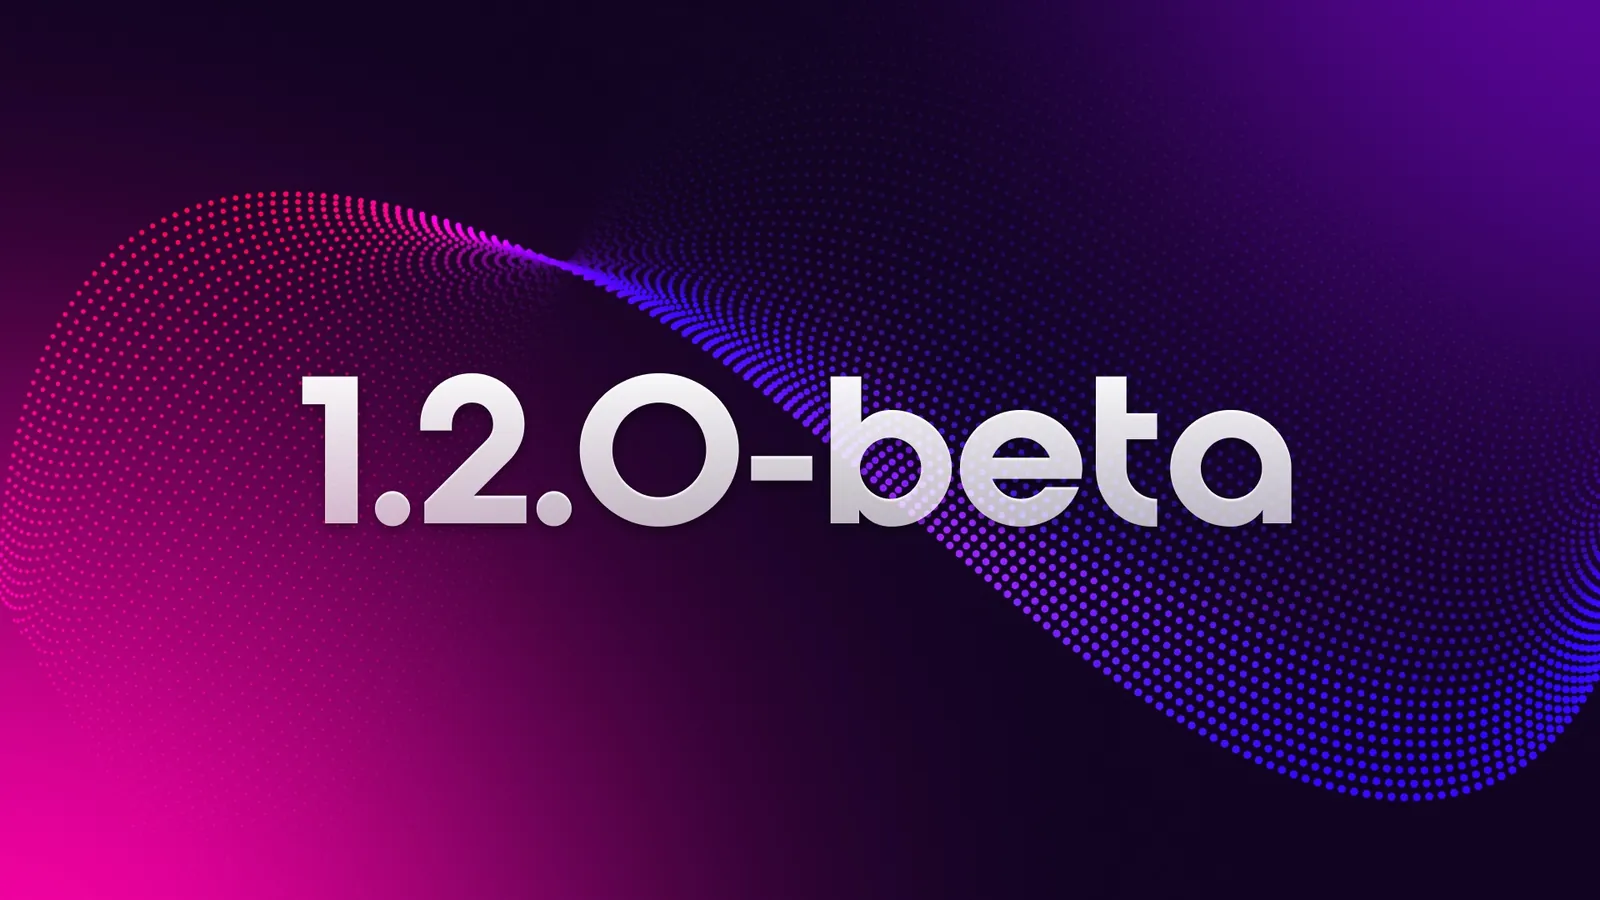 v1.2.0-beta.1 is live! 🎉